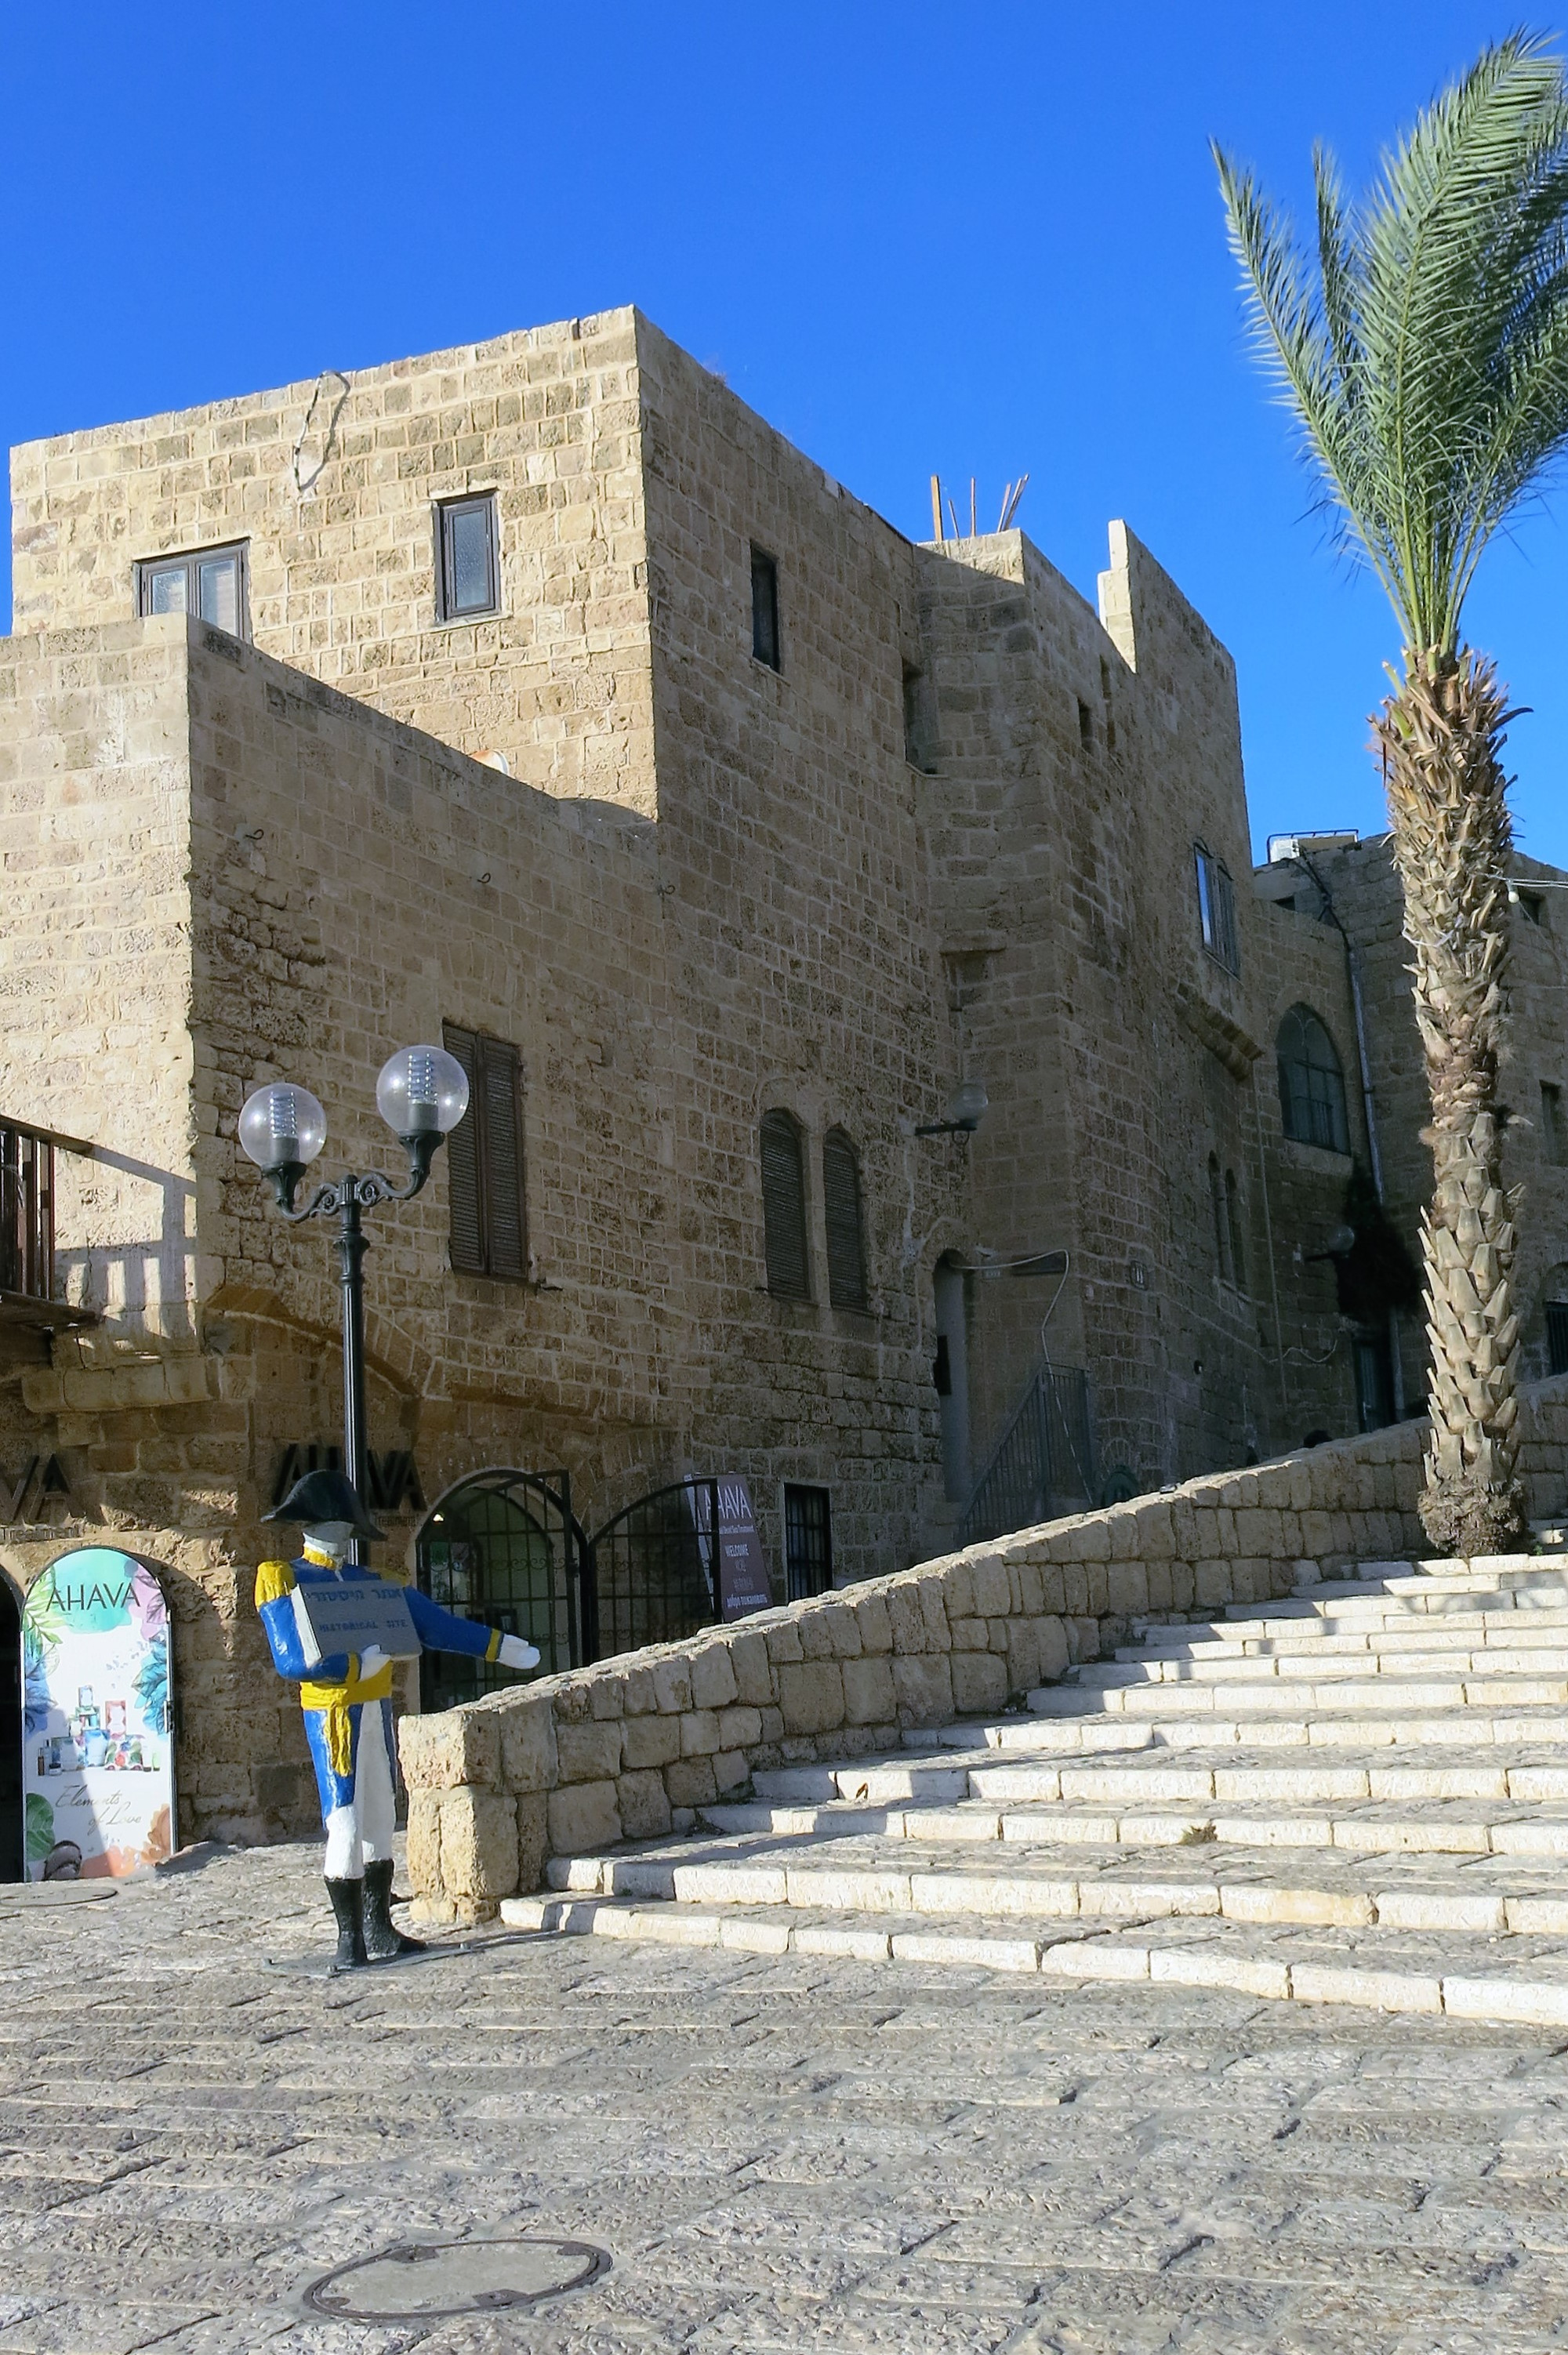 Ahava Store in Jaffa